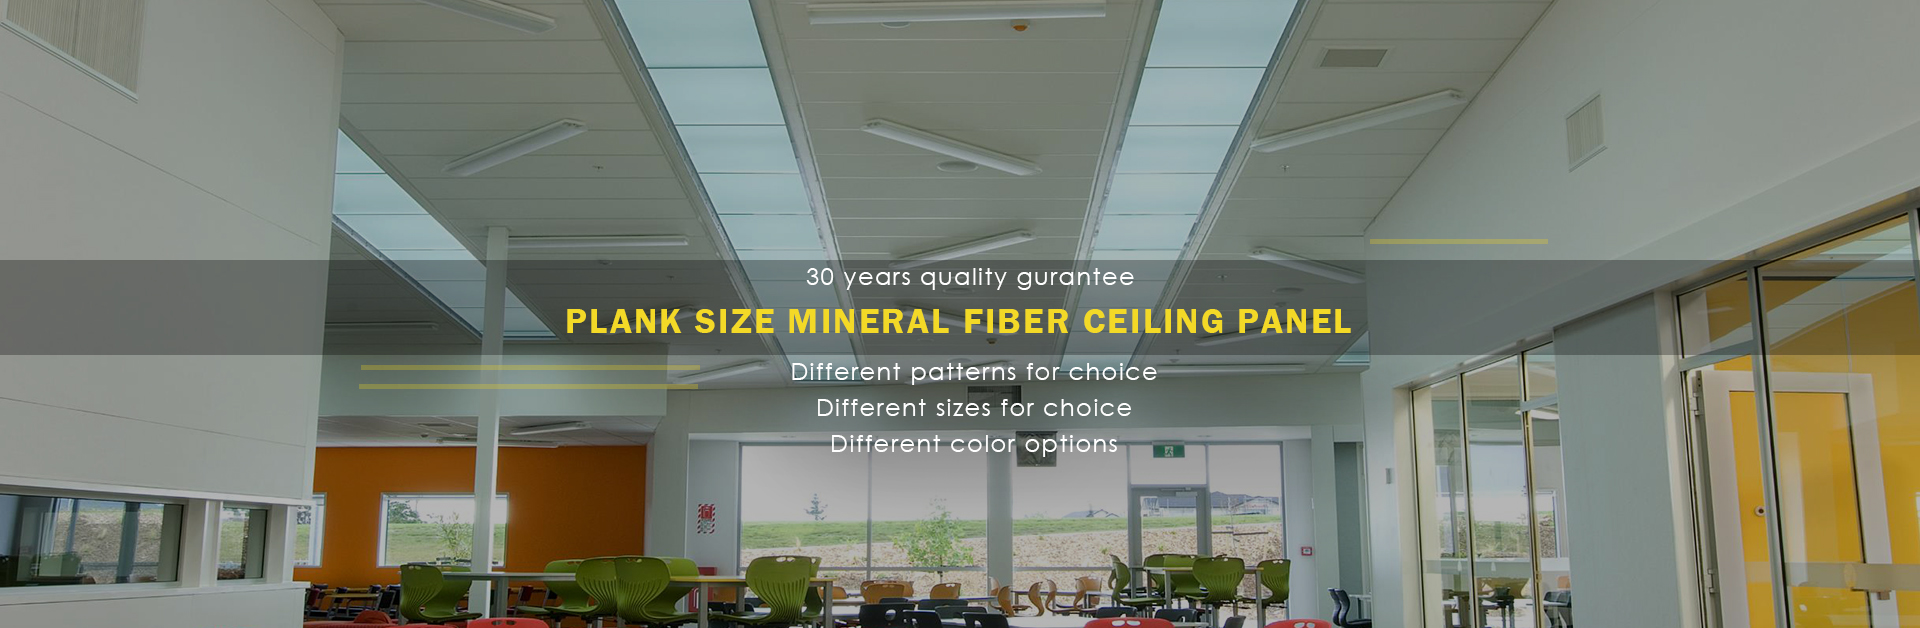 Plank size mineral fiber ceiling board